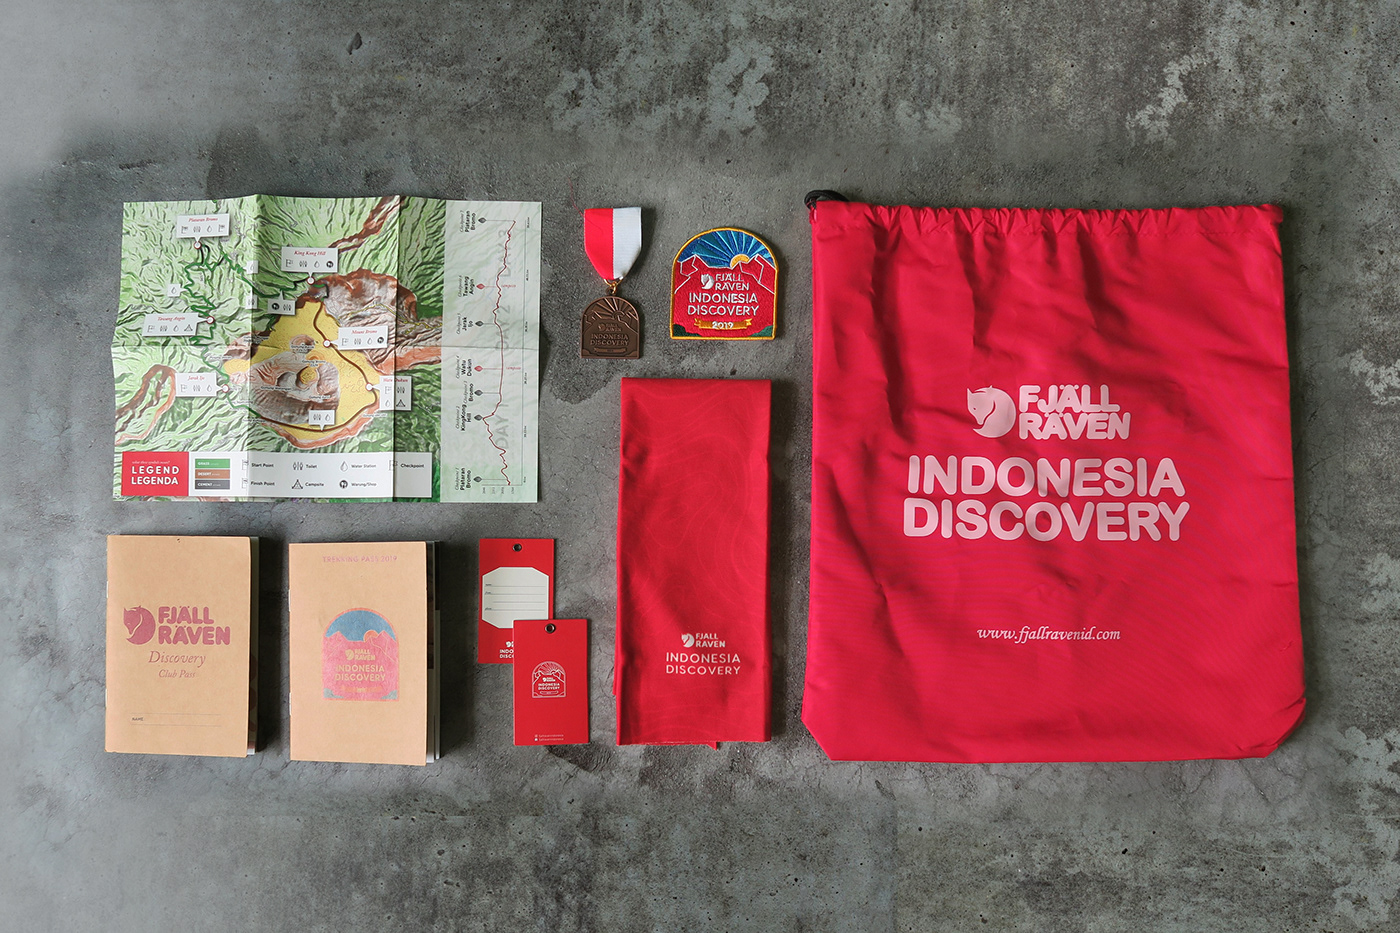 Fjällräven indonesia discovery brand identity merchandise Event mountain trekking Outdoor branding 